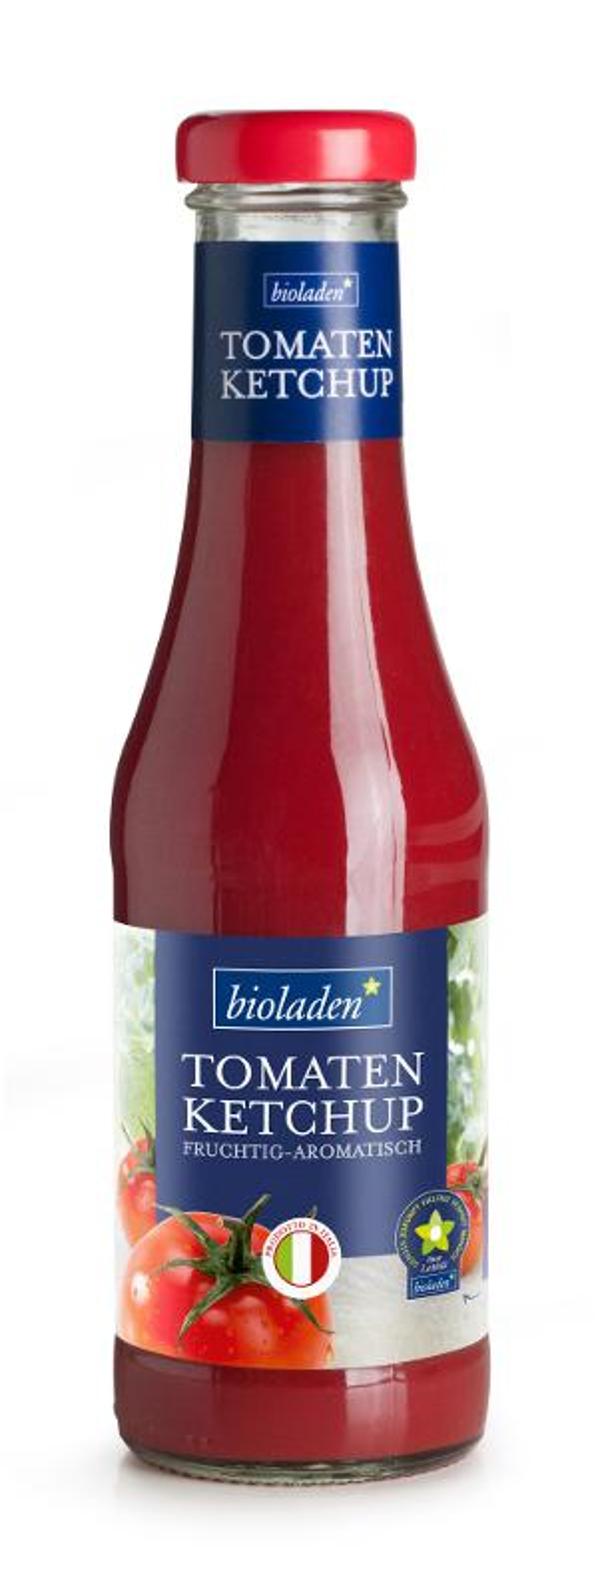 Produktfoto zu Tomaten-Ketchup